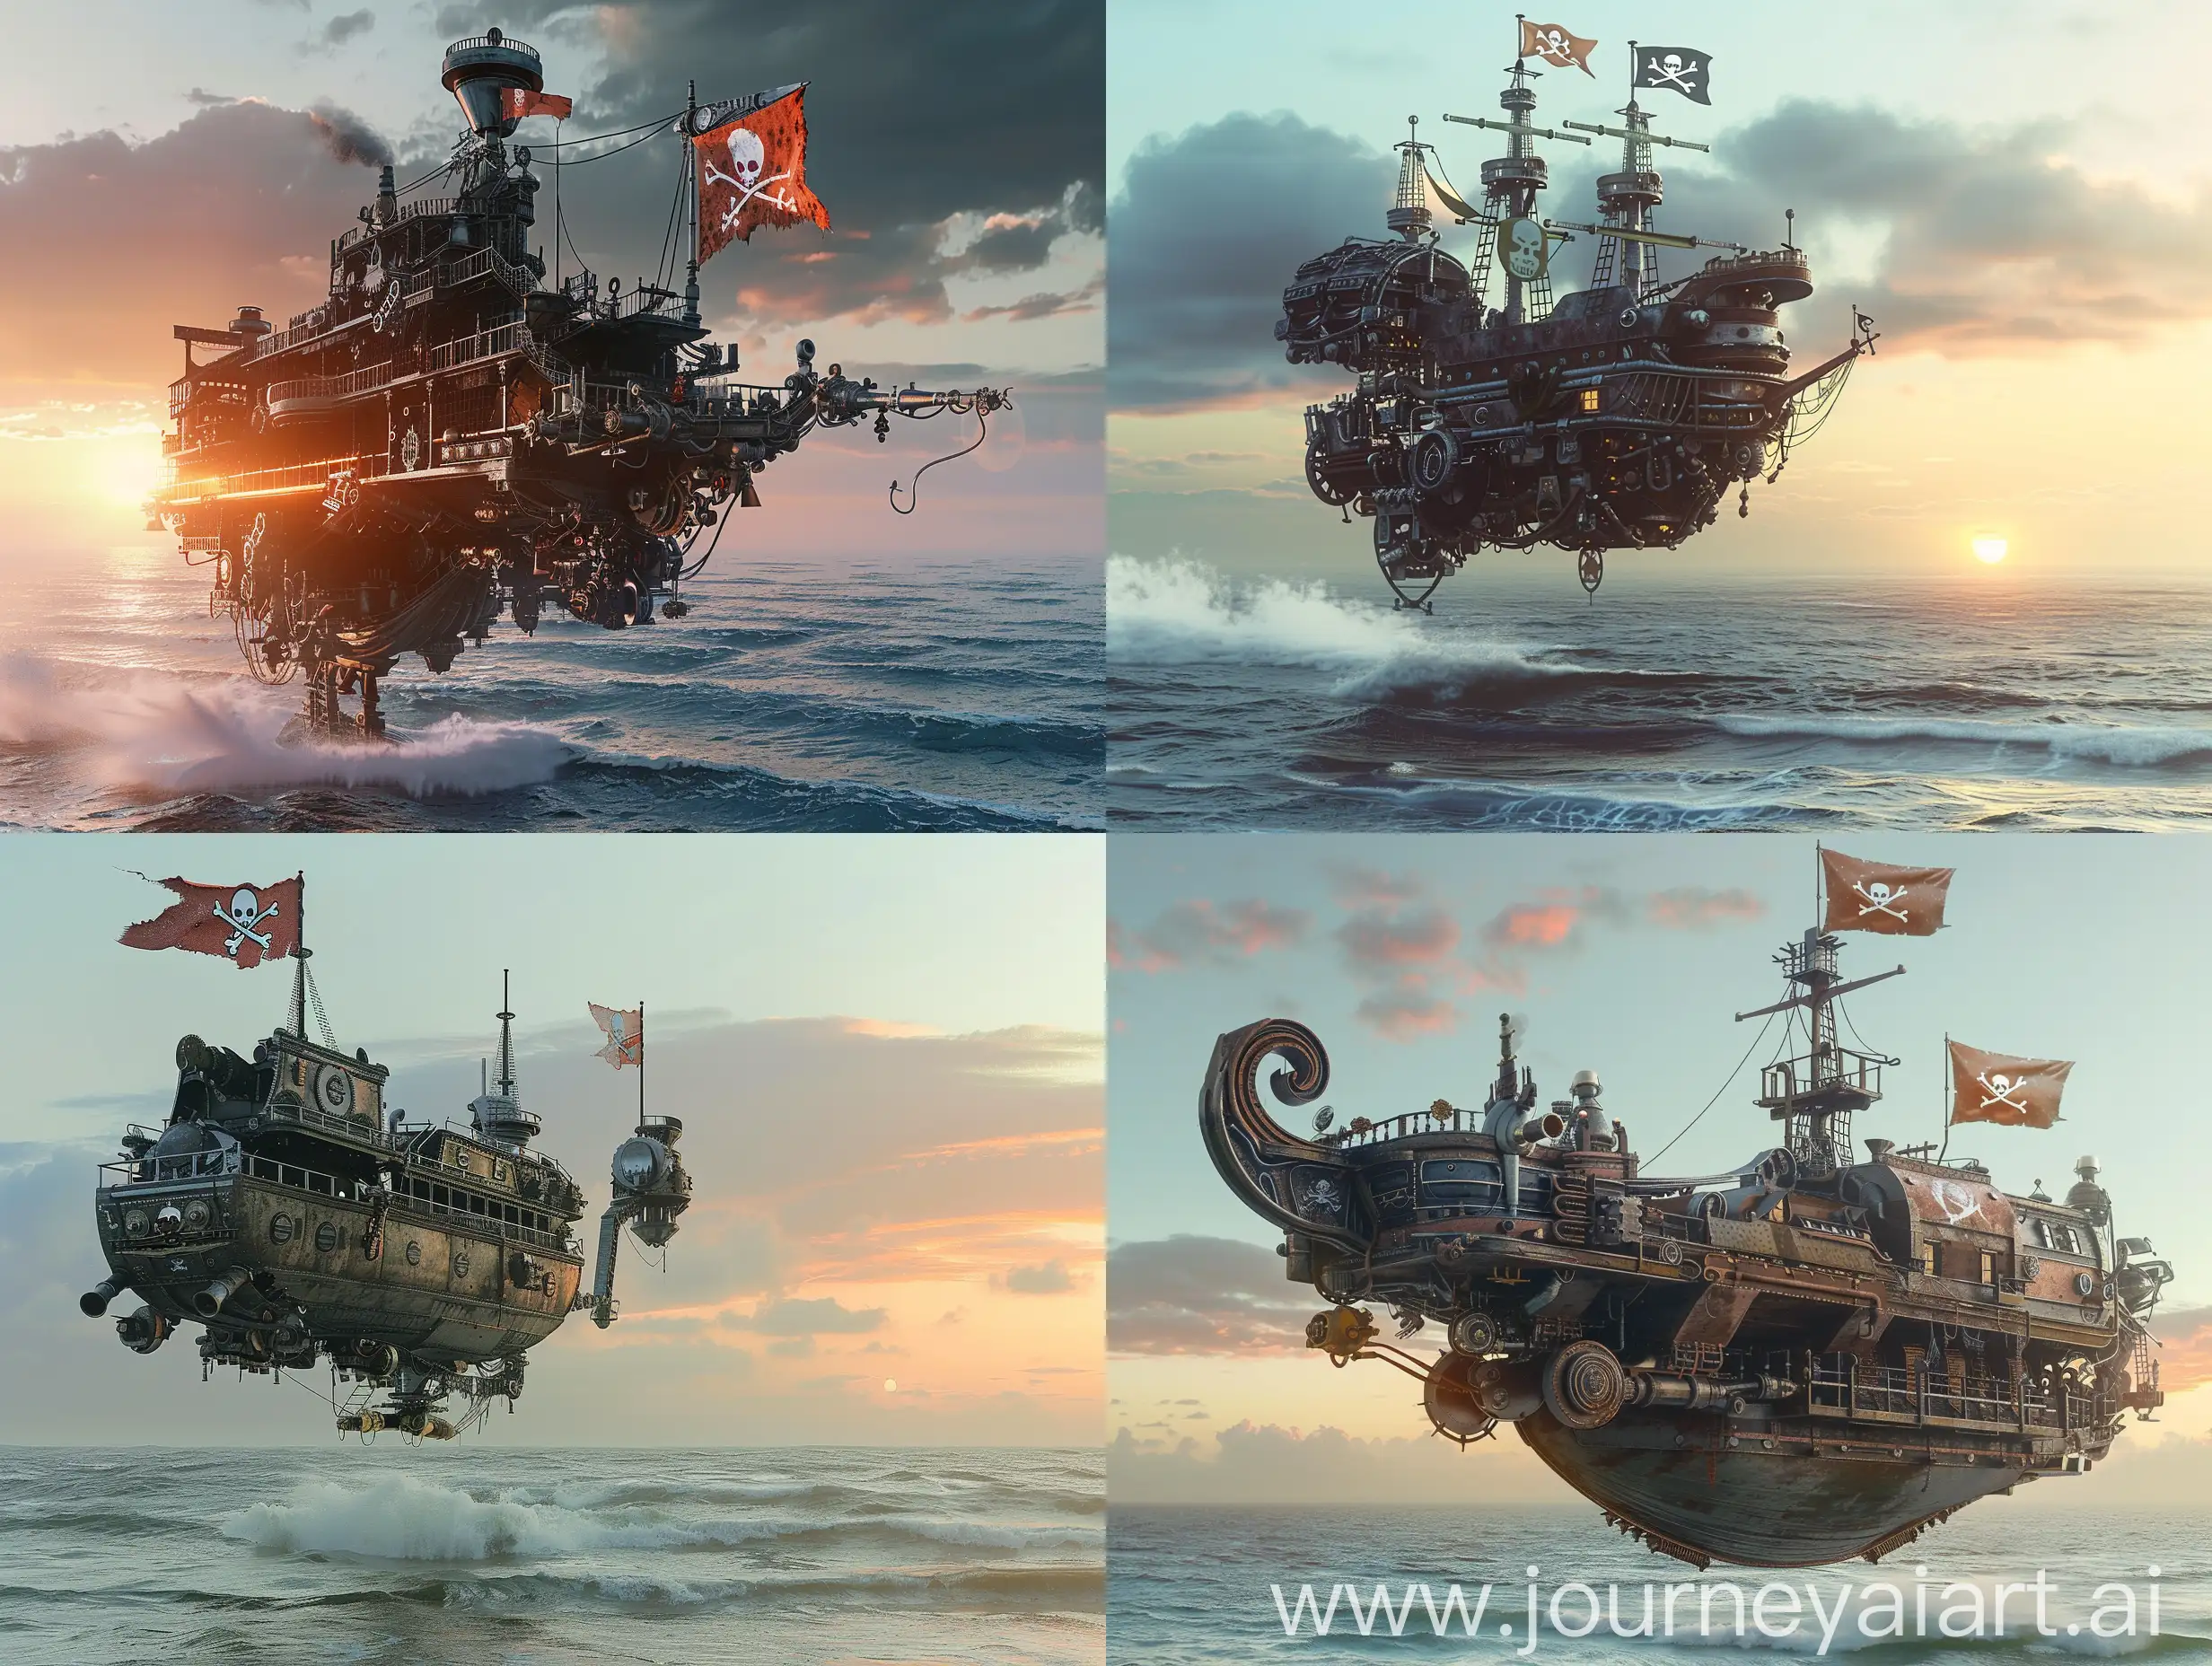 Pirate-Ship-Sailing-Through-Turbulent-Seas-at-Sunset